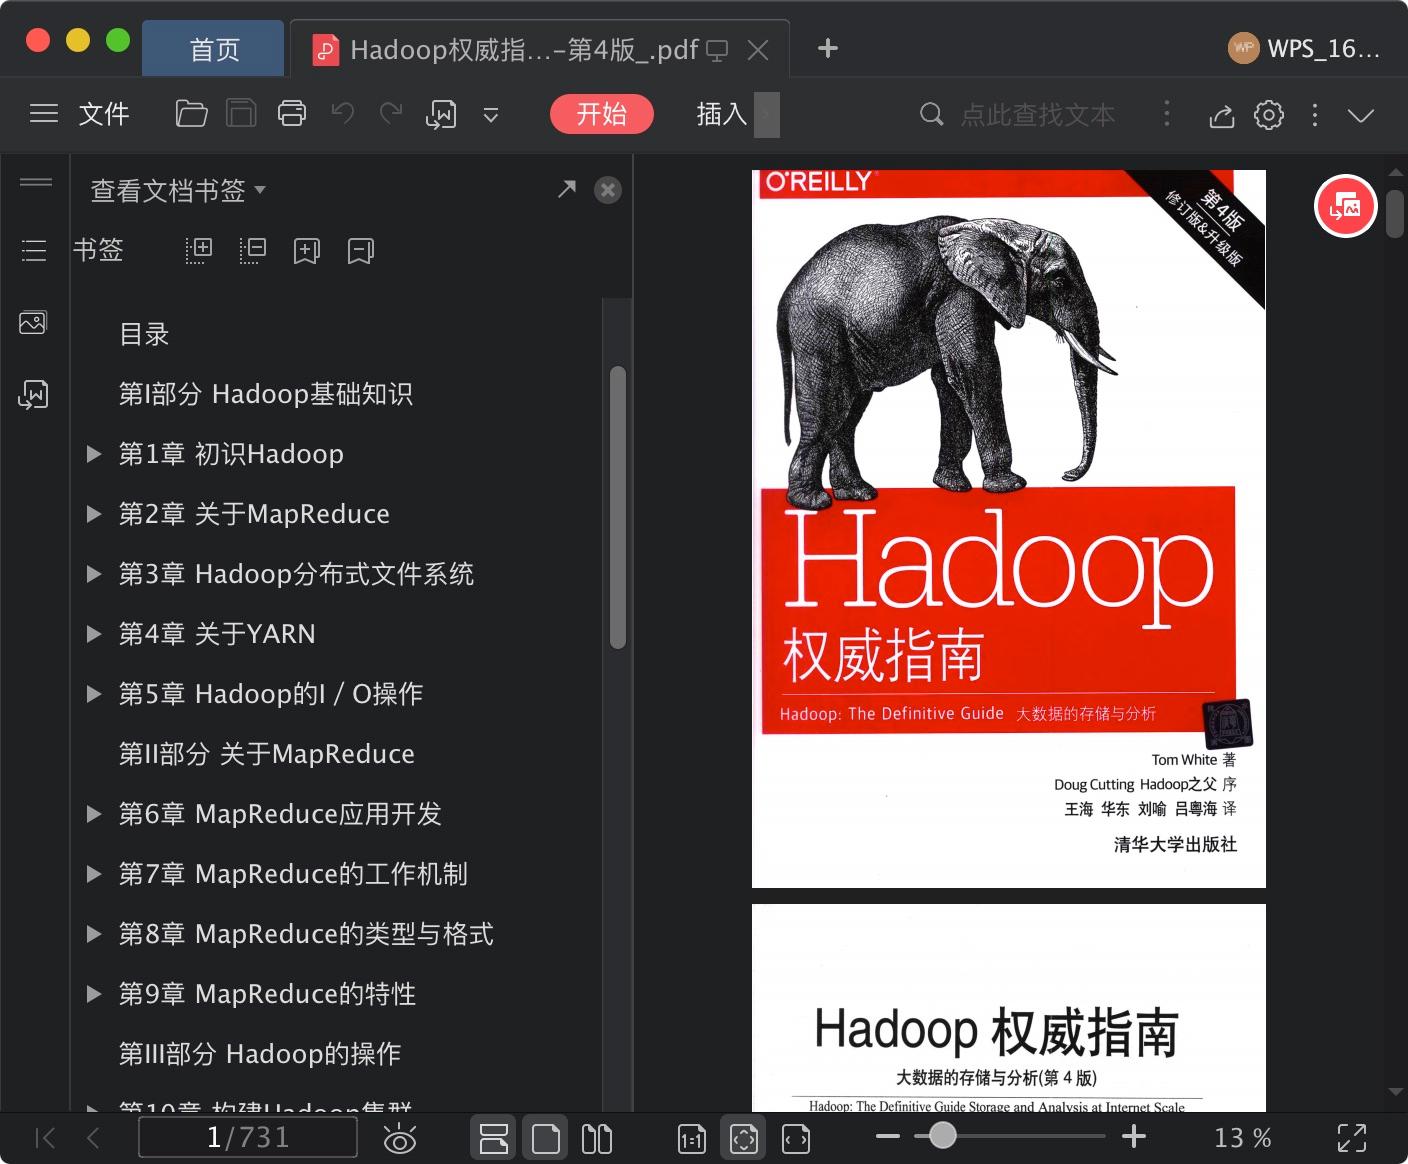 Hadoop权威指南 大数据的存储与分析-第4版pdf电子书籍下载百度云